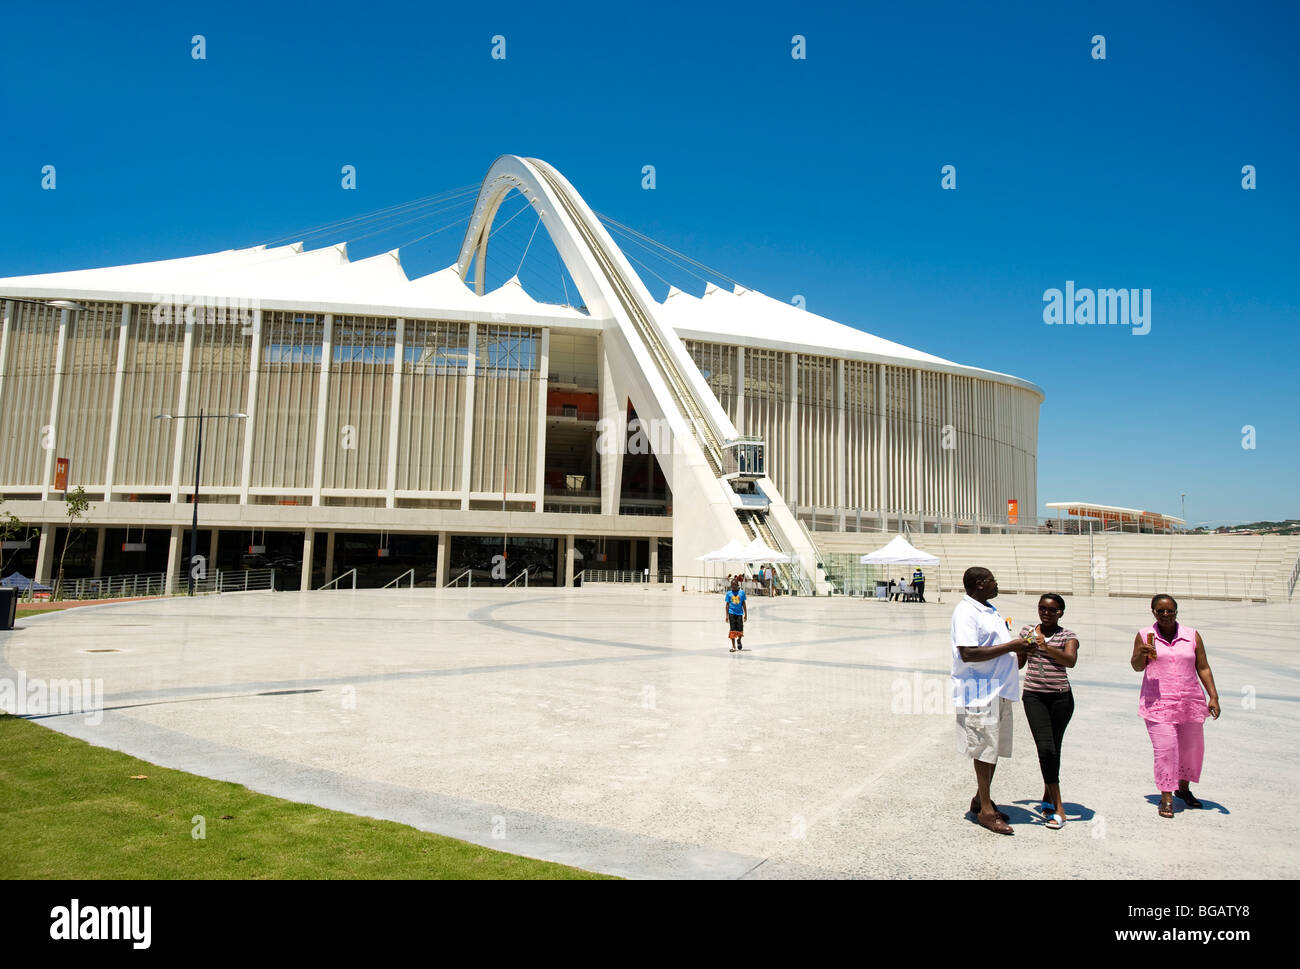 Das Durban Moses Mabhida Stadion. Durban, Südafrika Stockfoto